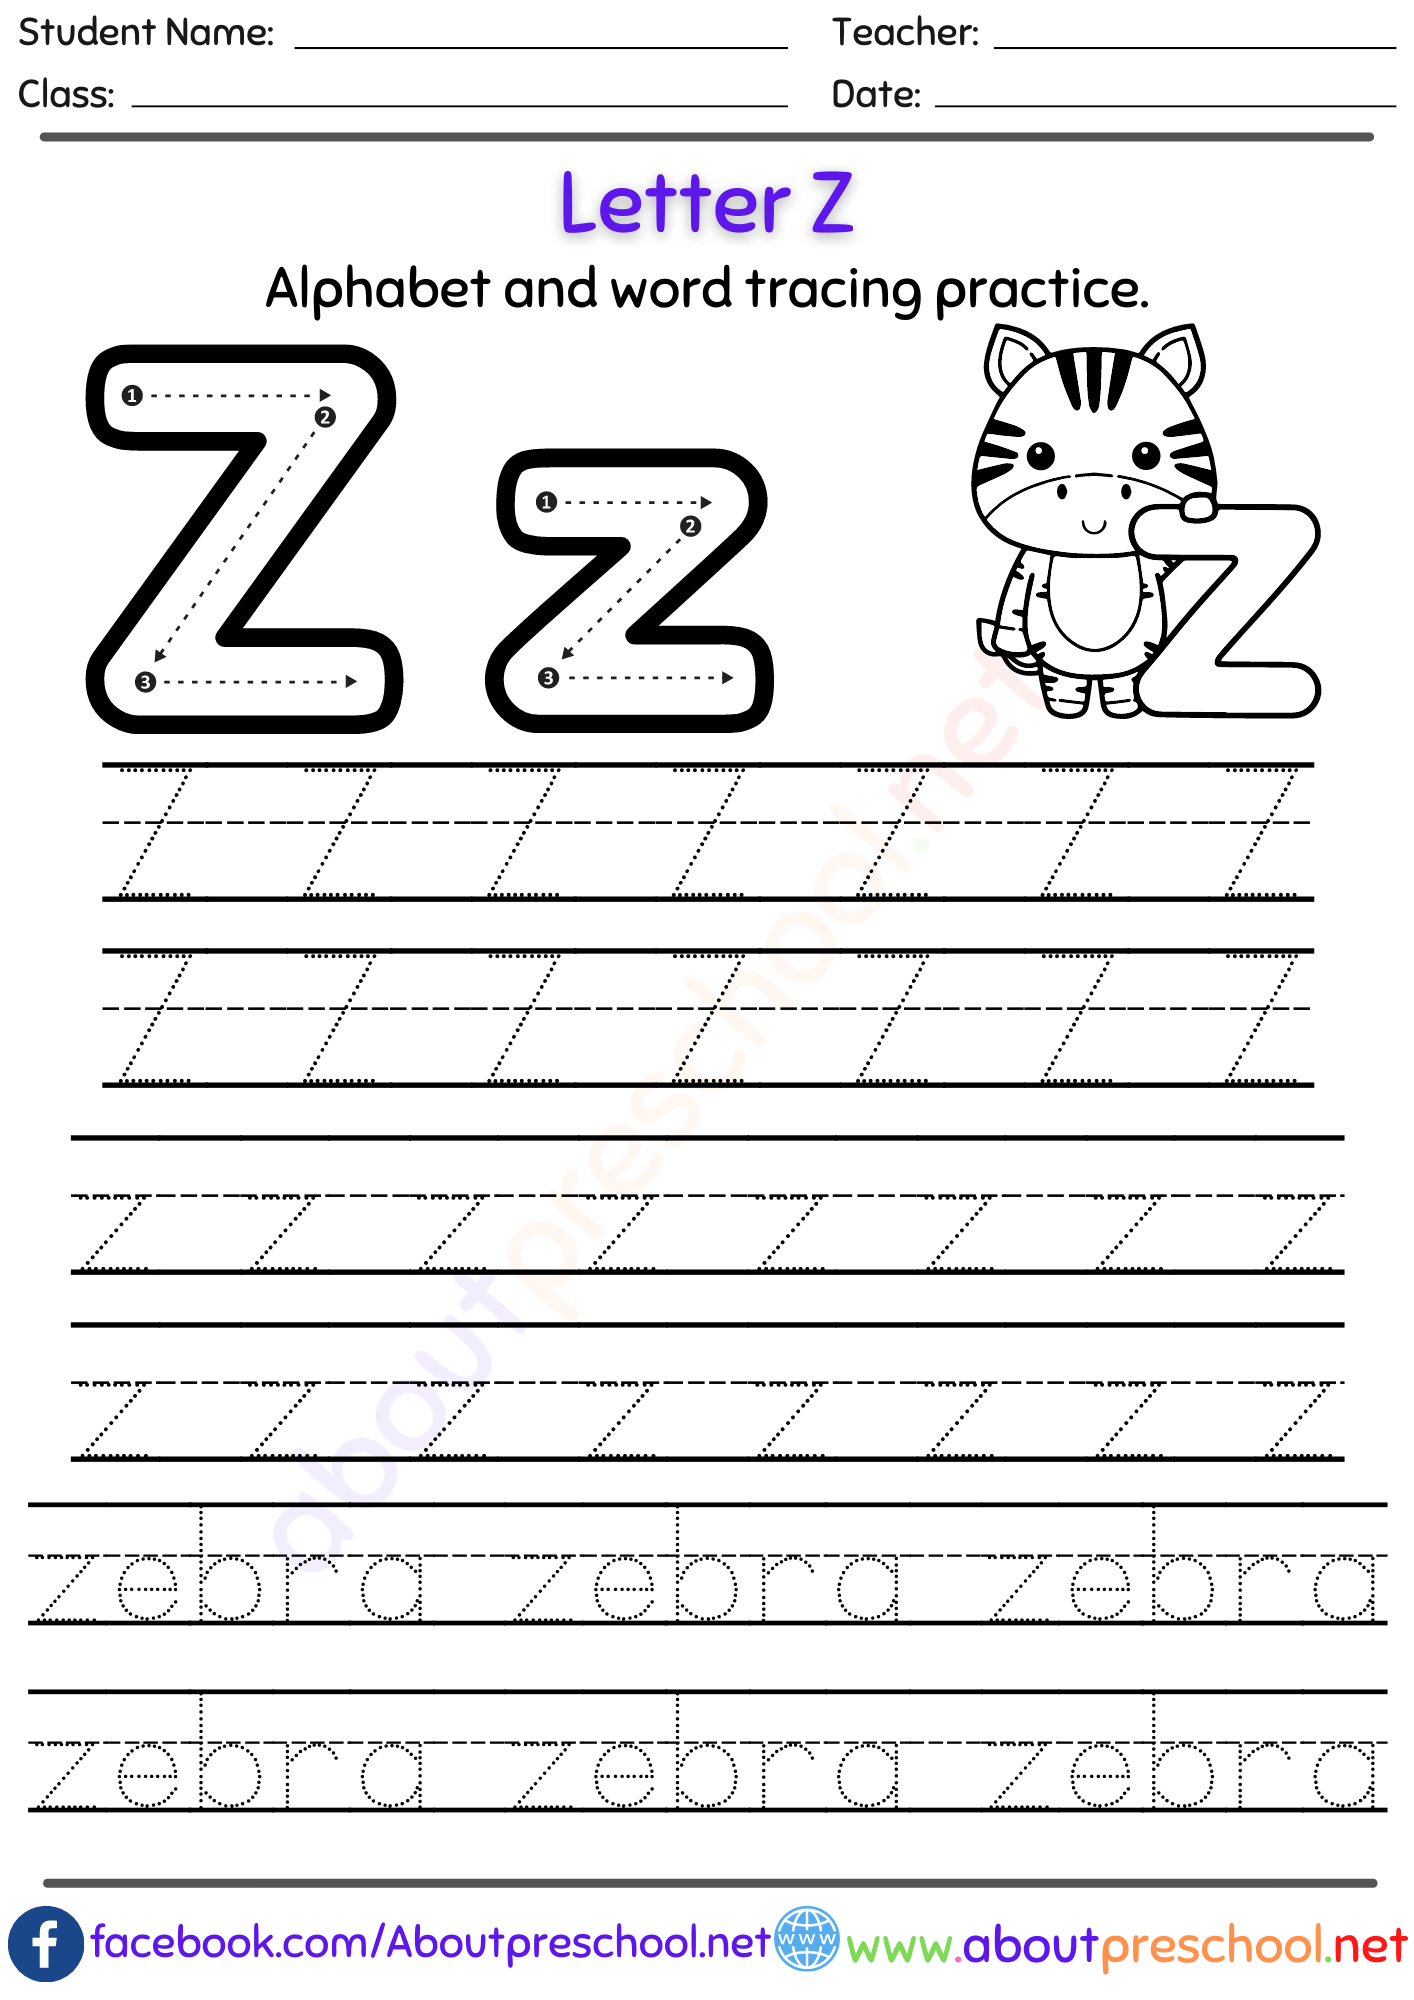 Free Letter Z Alphabet tracing worksheets